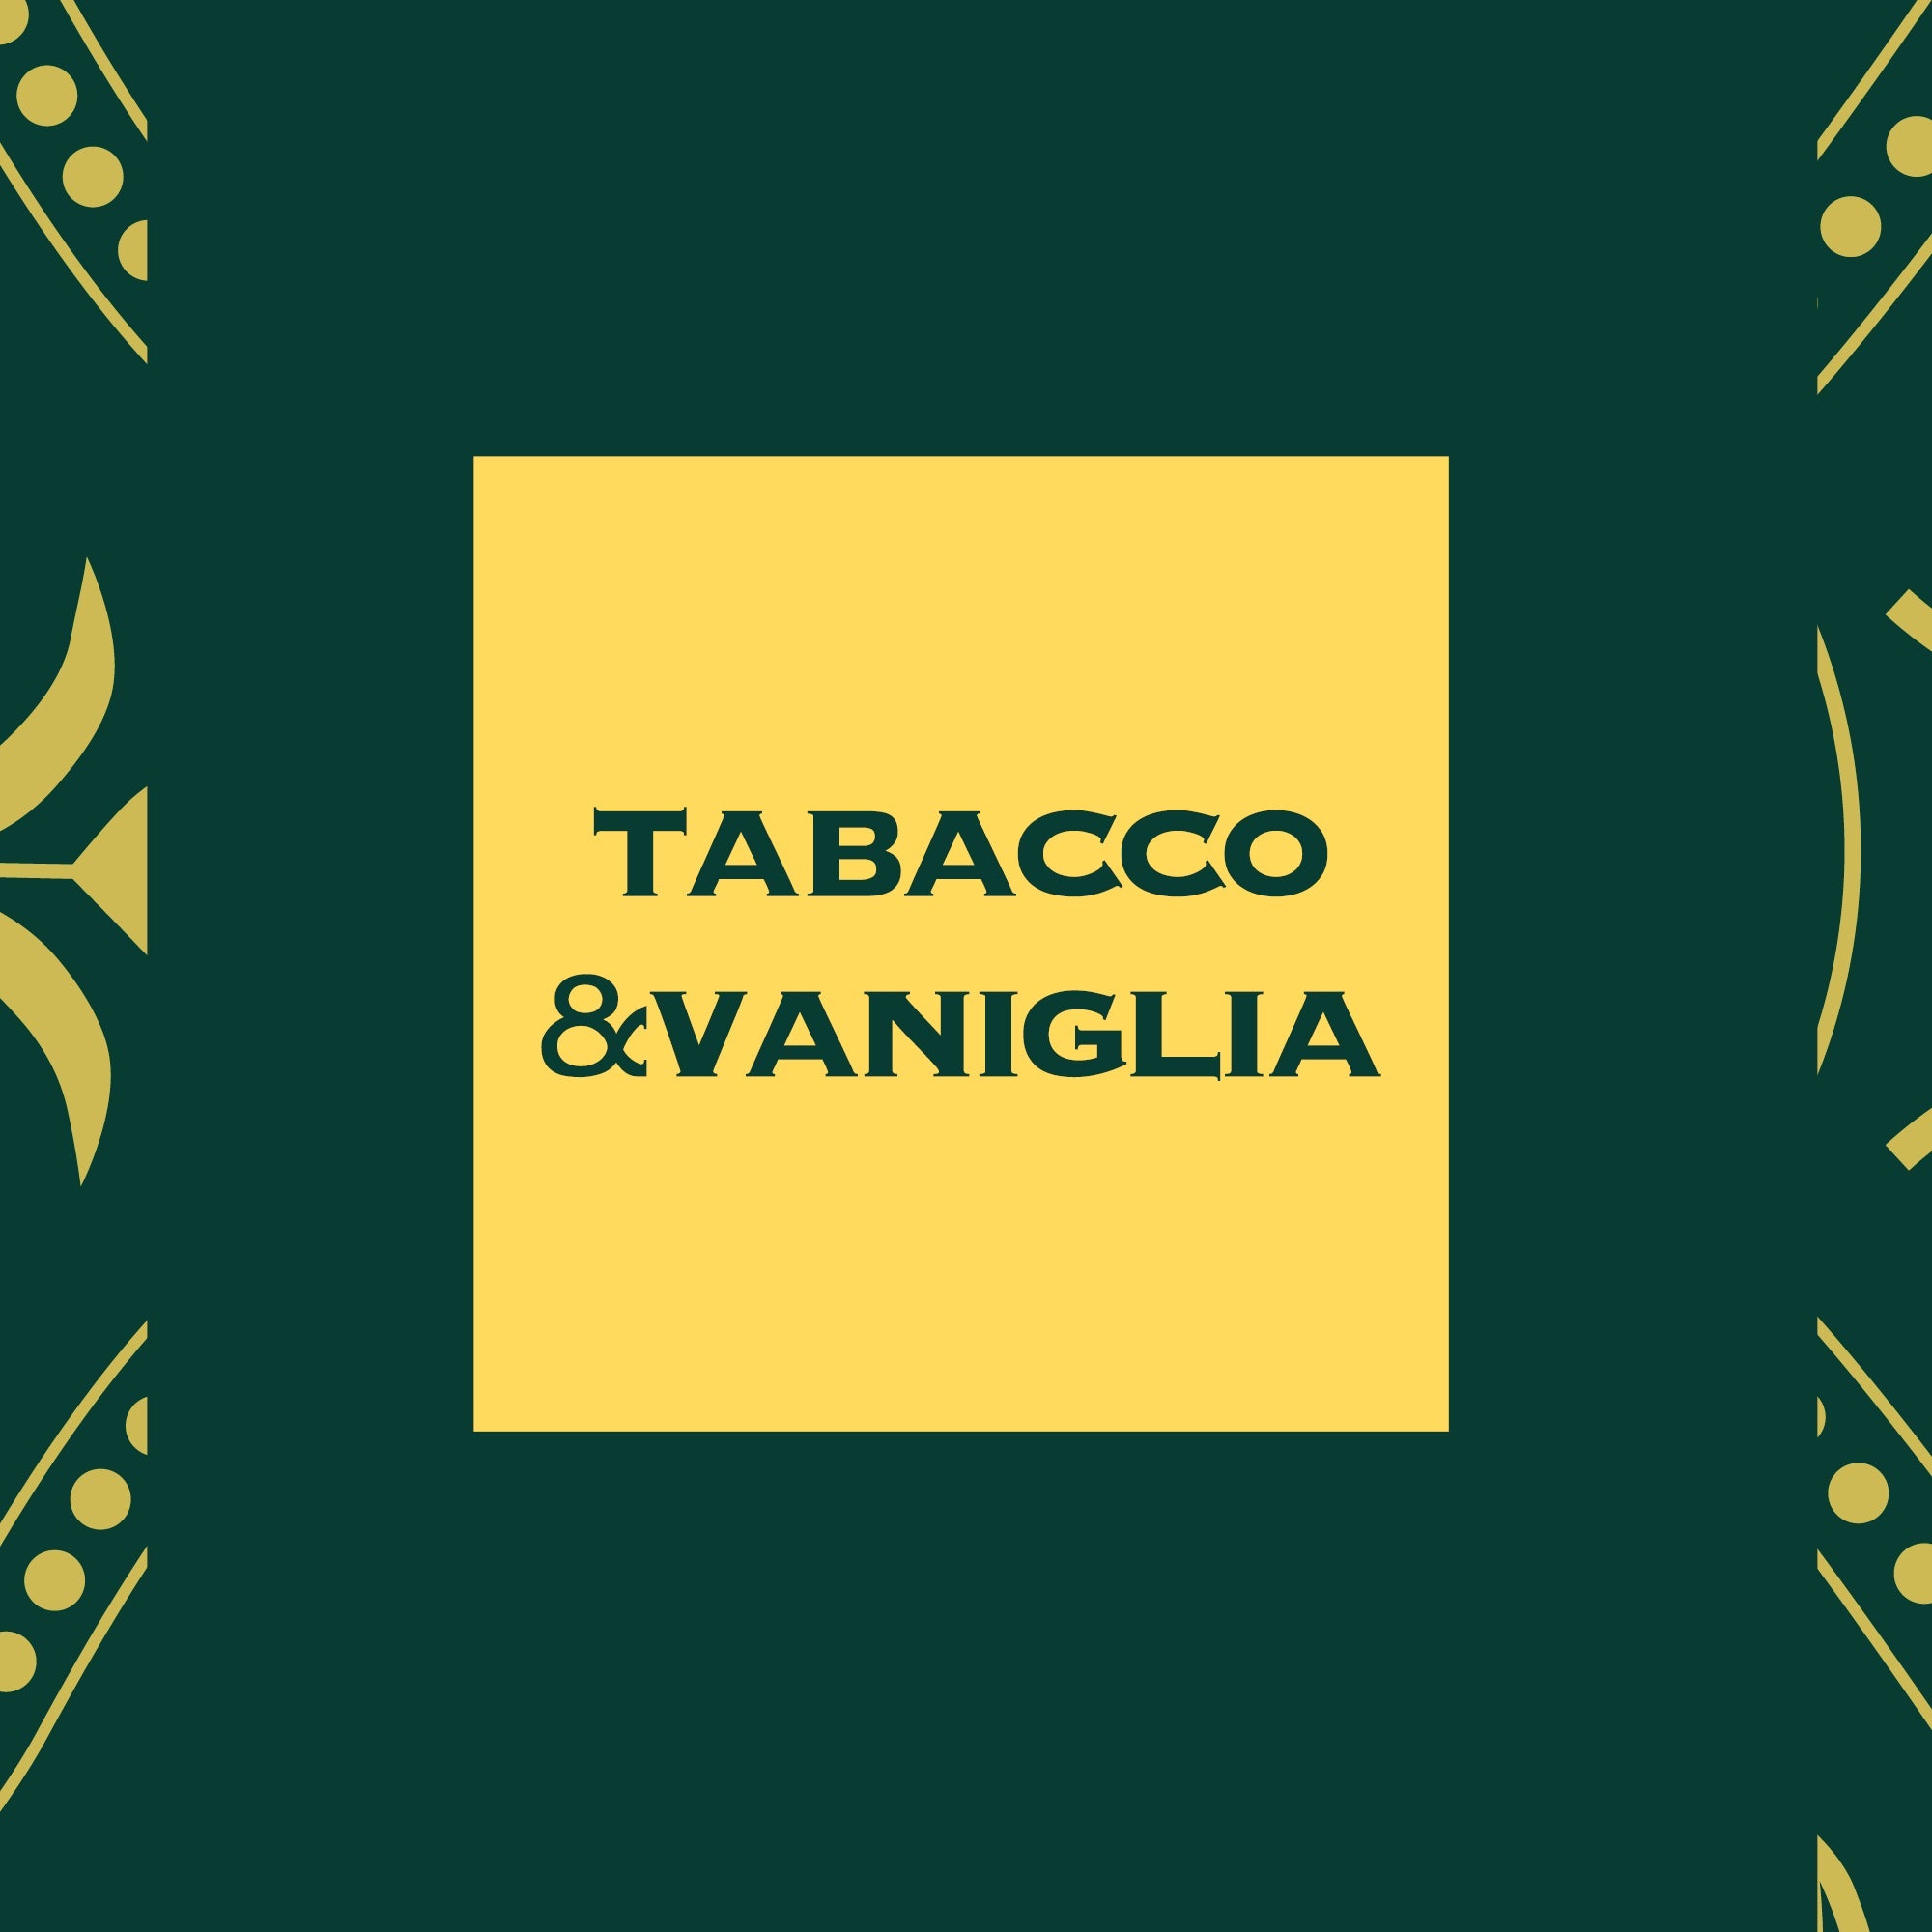 Tabacco & Vaniglia - Varriale Profumi®